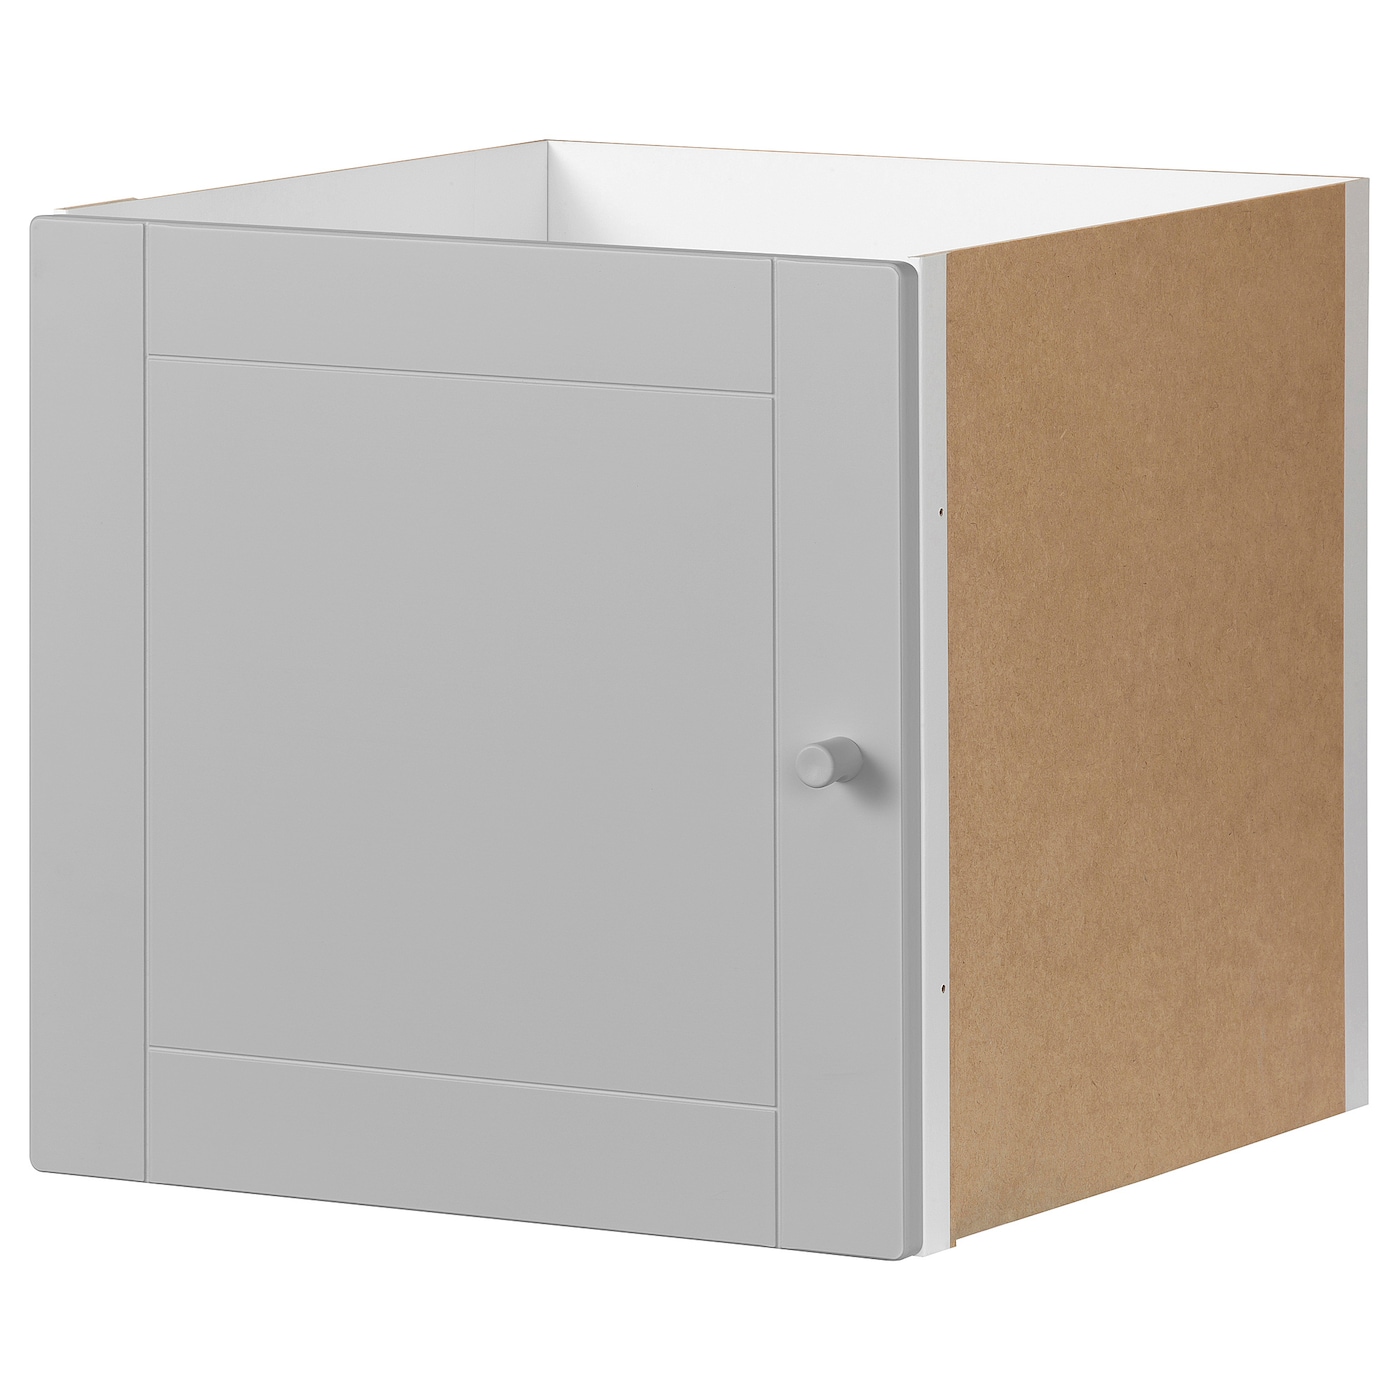 Вставка с дверцей - KALLAX IKEA/КАЛЛАКС ИКЕА, 33х33 см, бежевый/серый